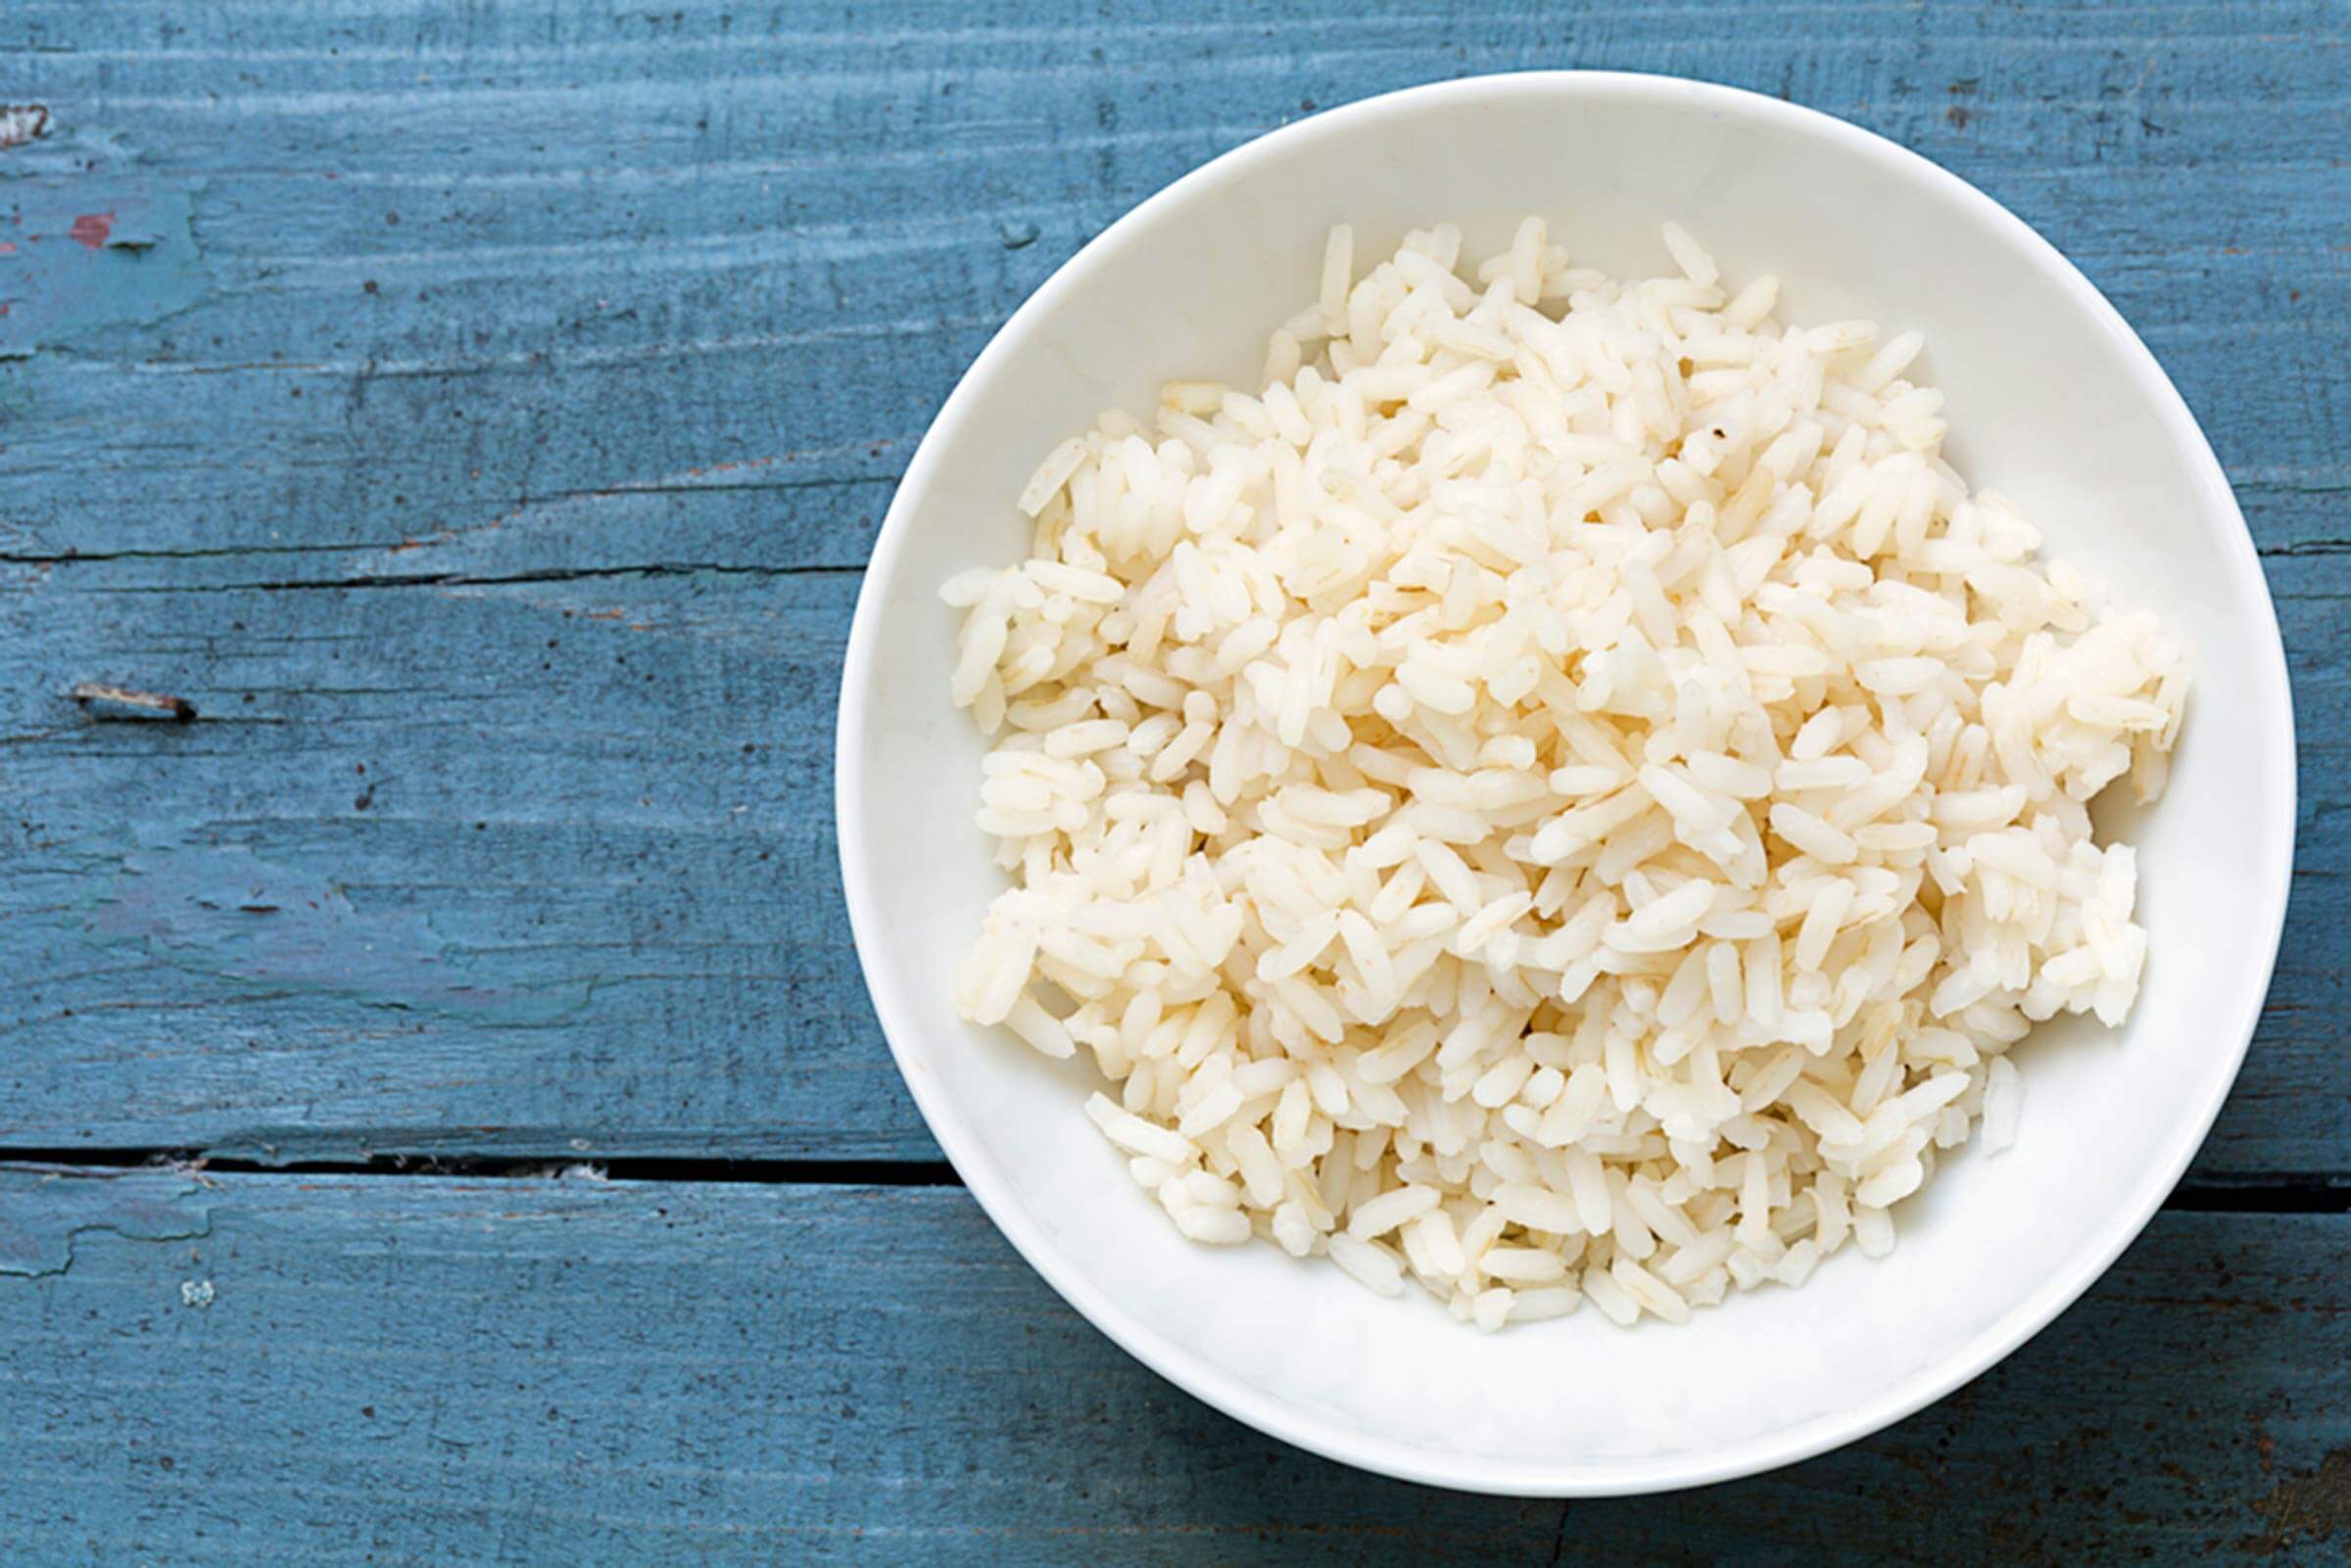 Nα πως θα μαγειρέψετε το ρύζι για απώλεια βάρους και καύση του λίπους